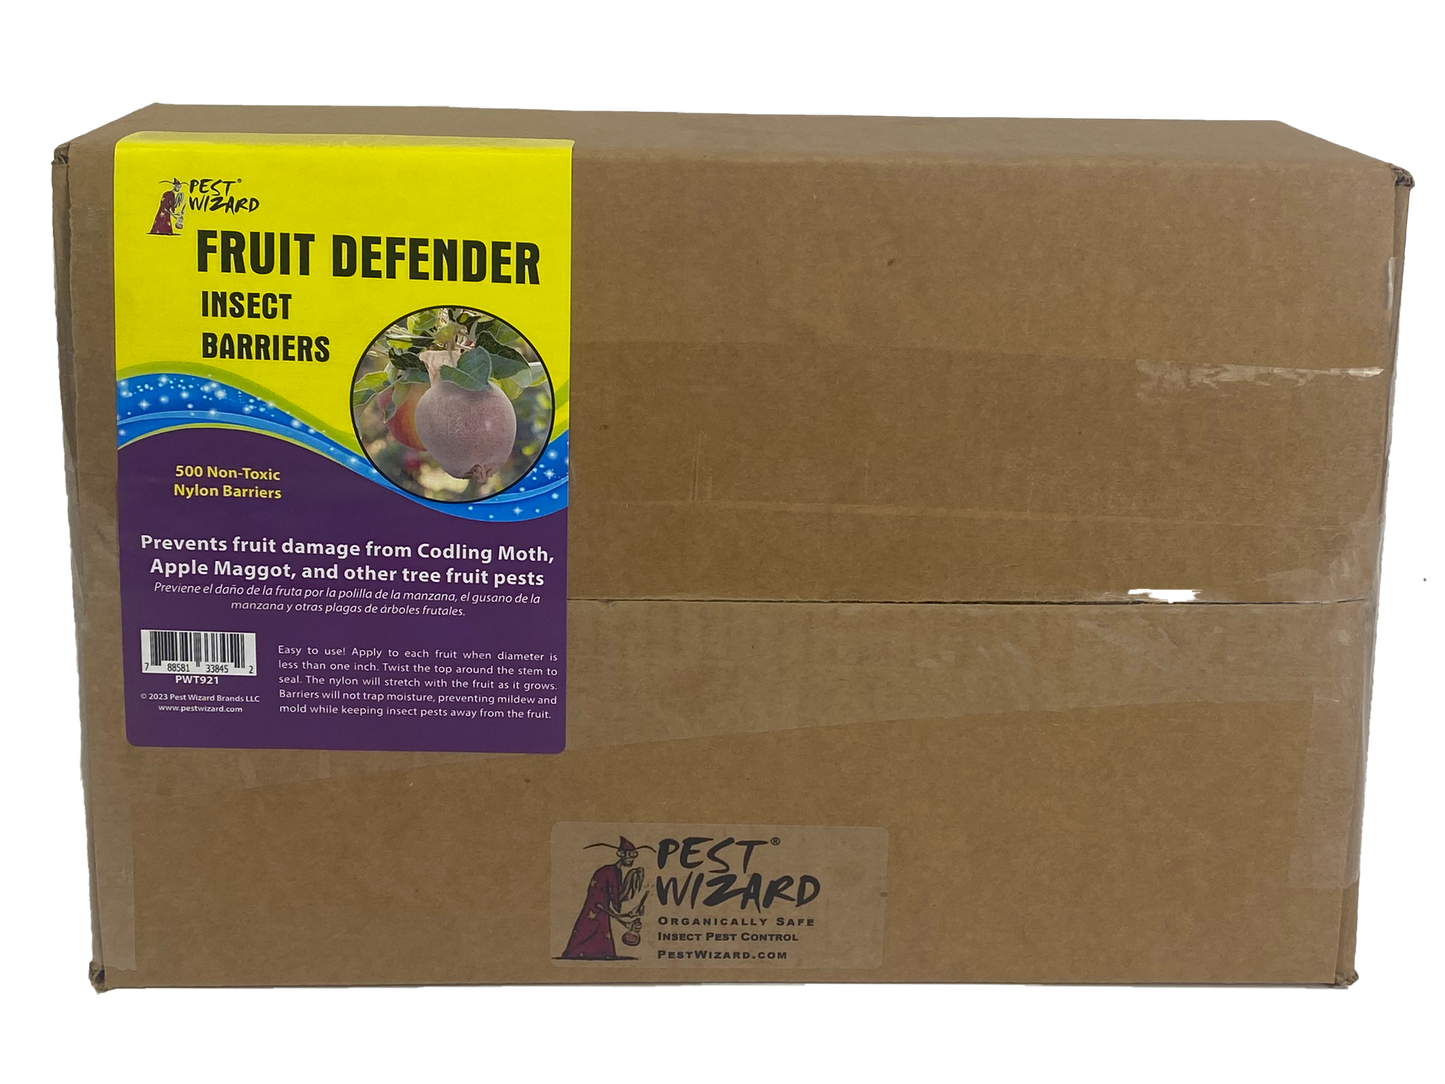 Pest Wizard Fruit Defender Insect Barrier 500-Pack